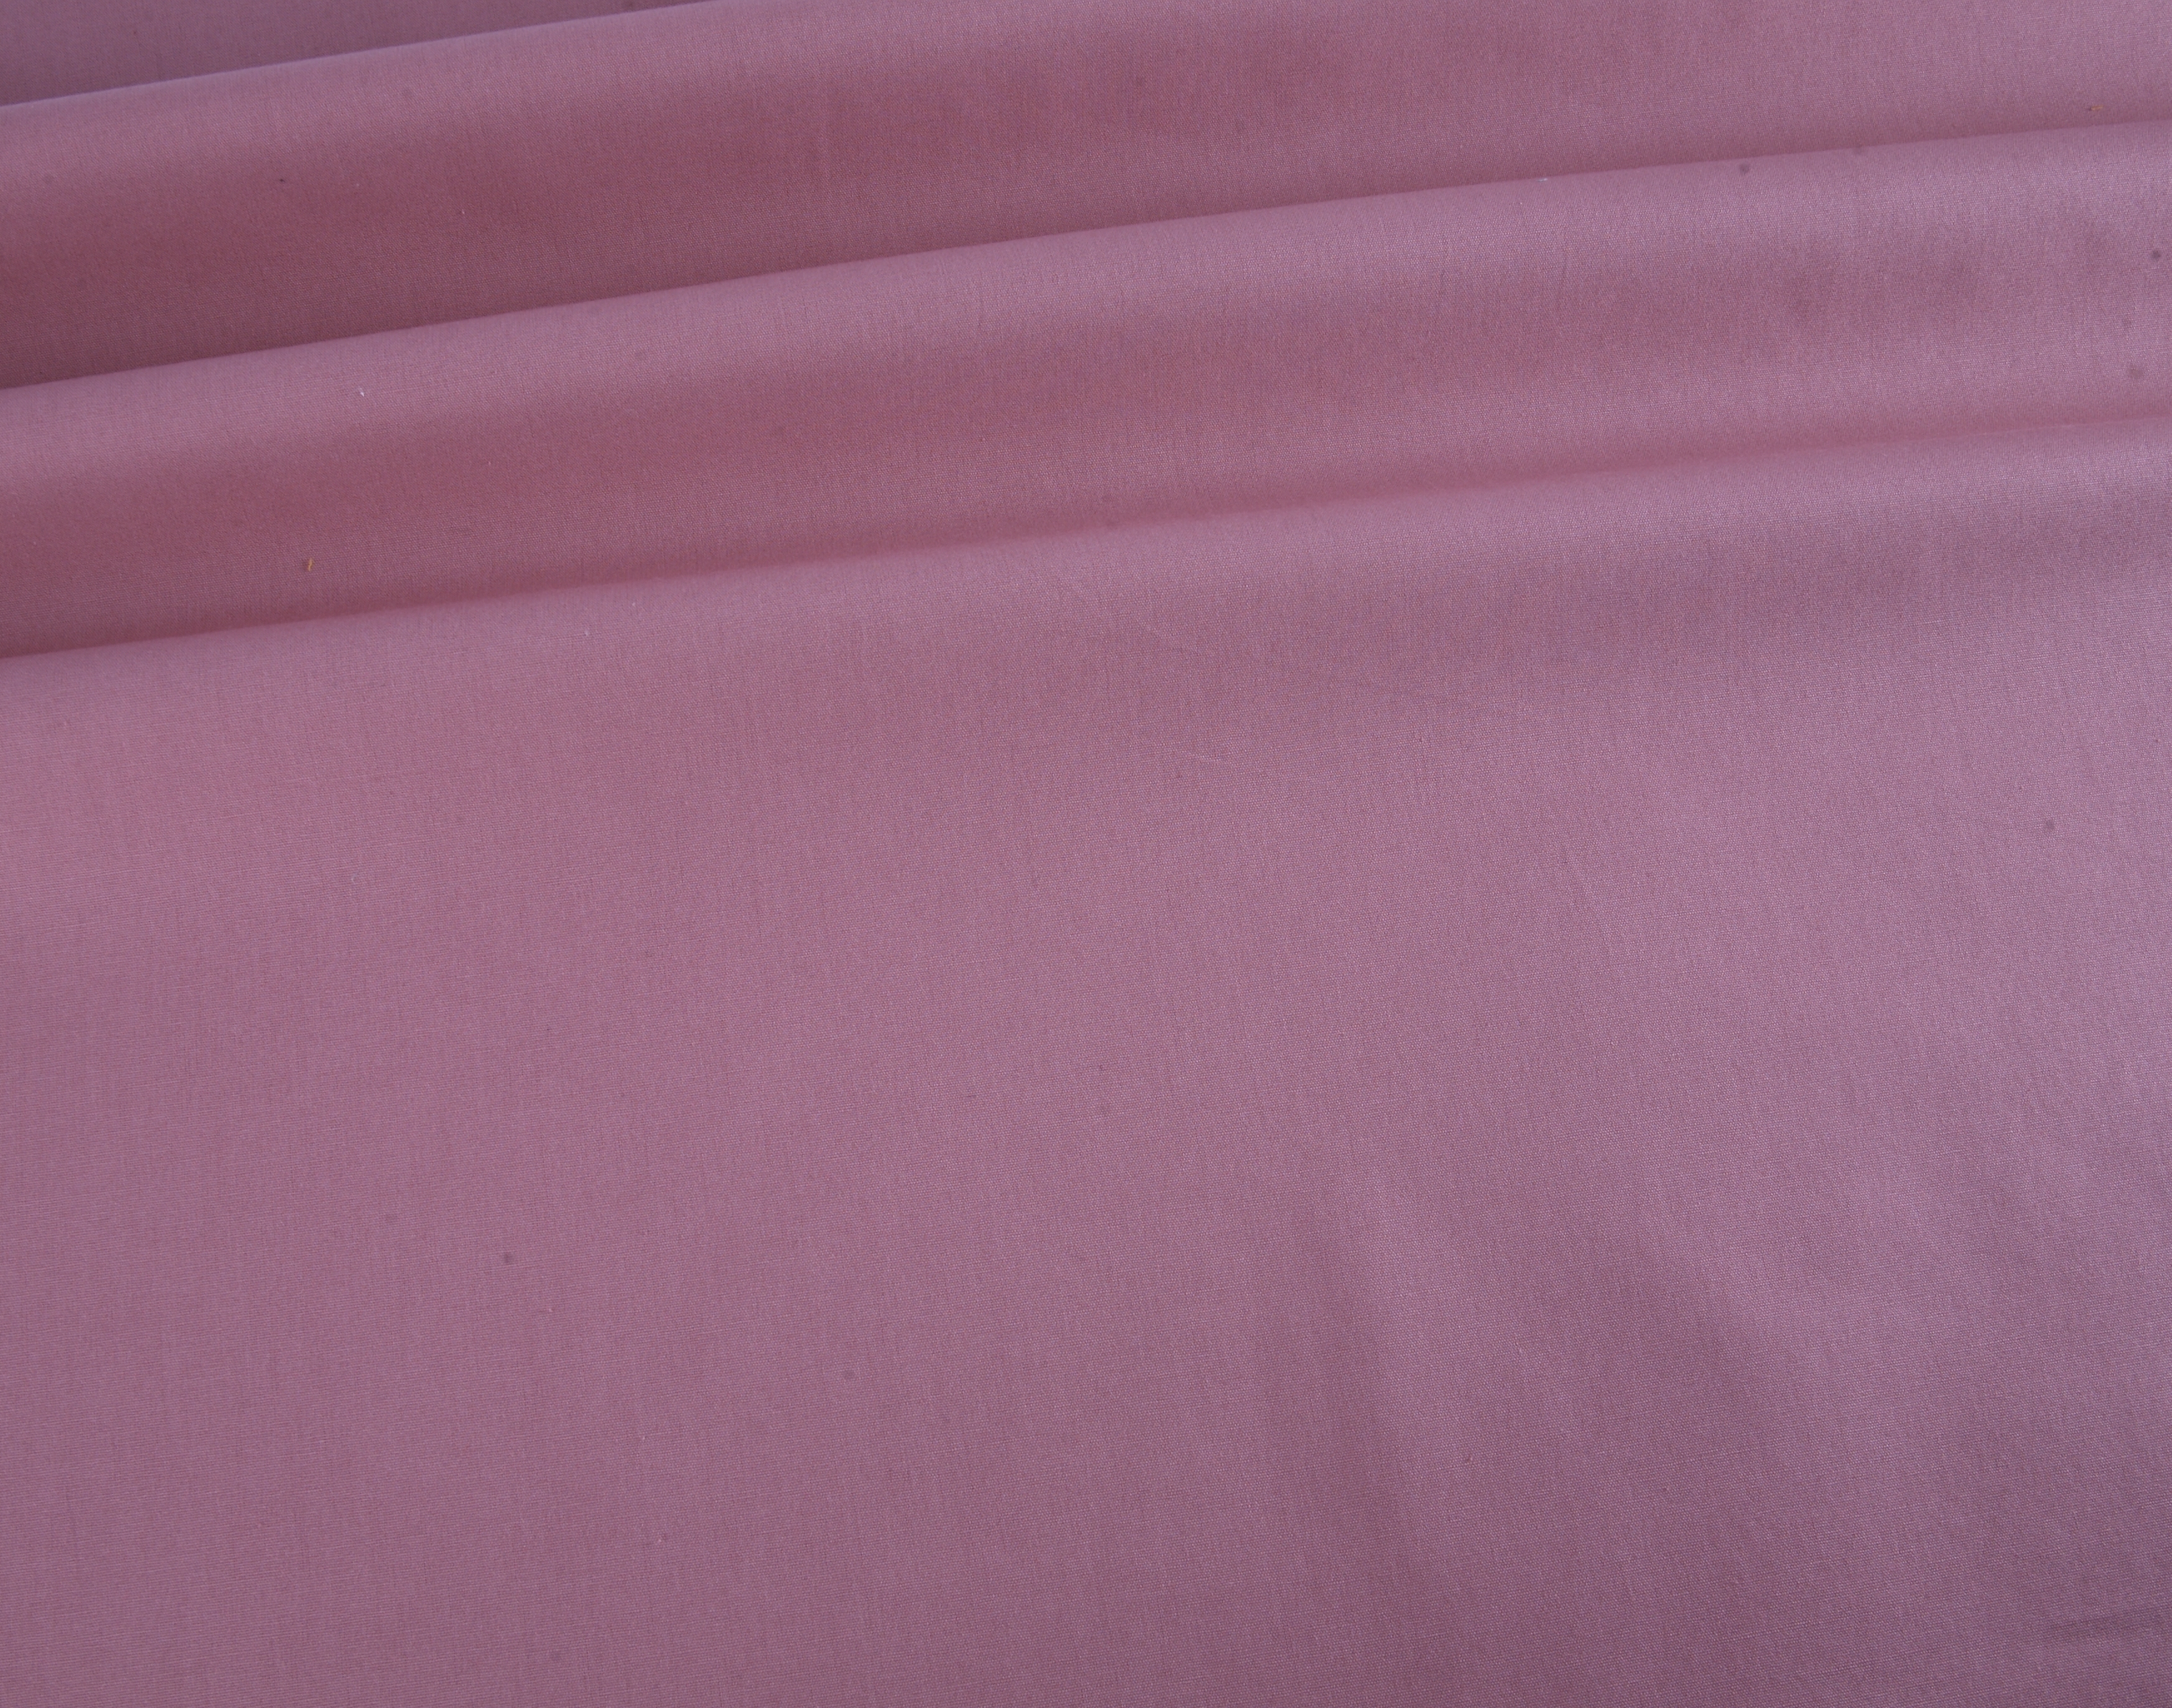 Premium Plain Cotton Poplin - Blush Pink